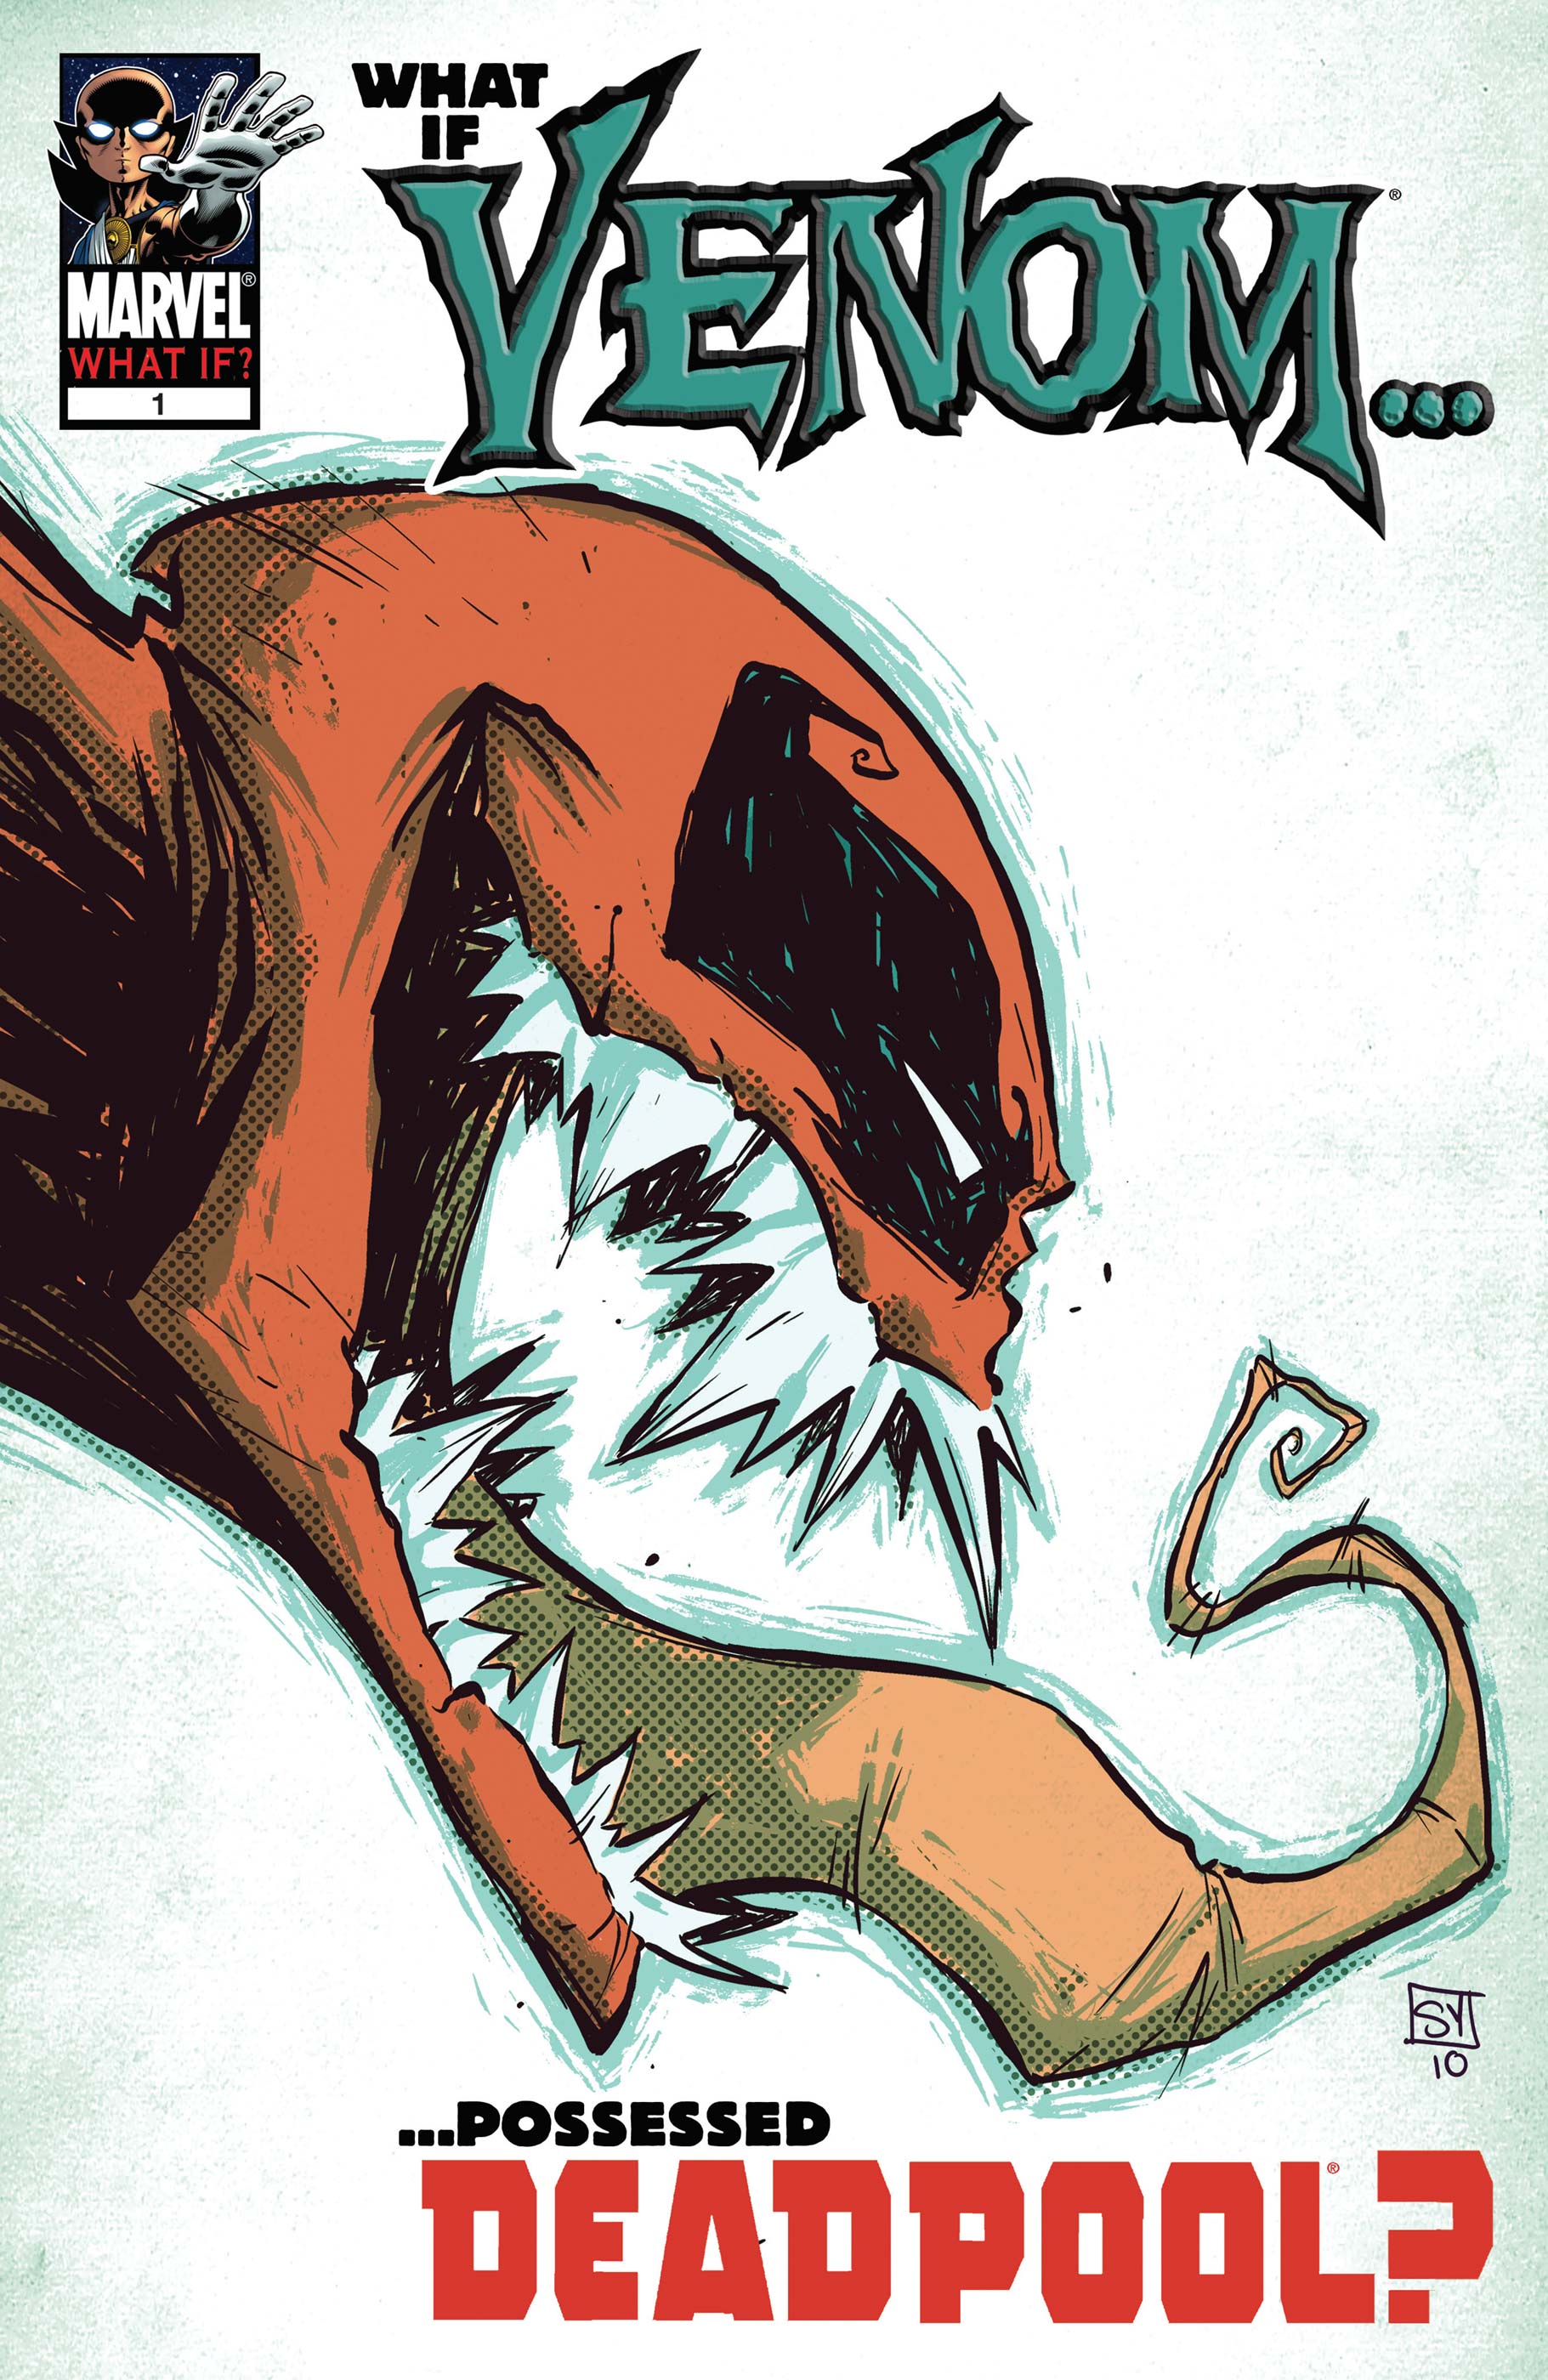 What If? Venom/Deadpool (2010) #1